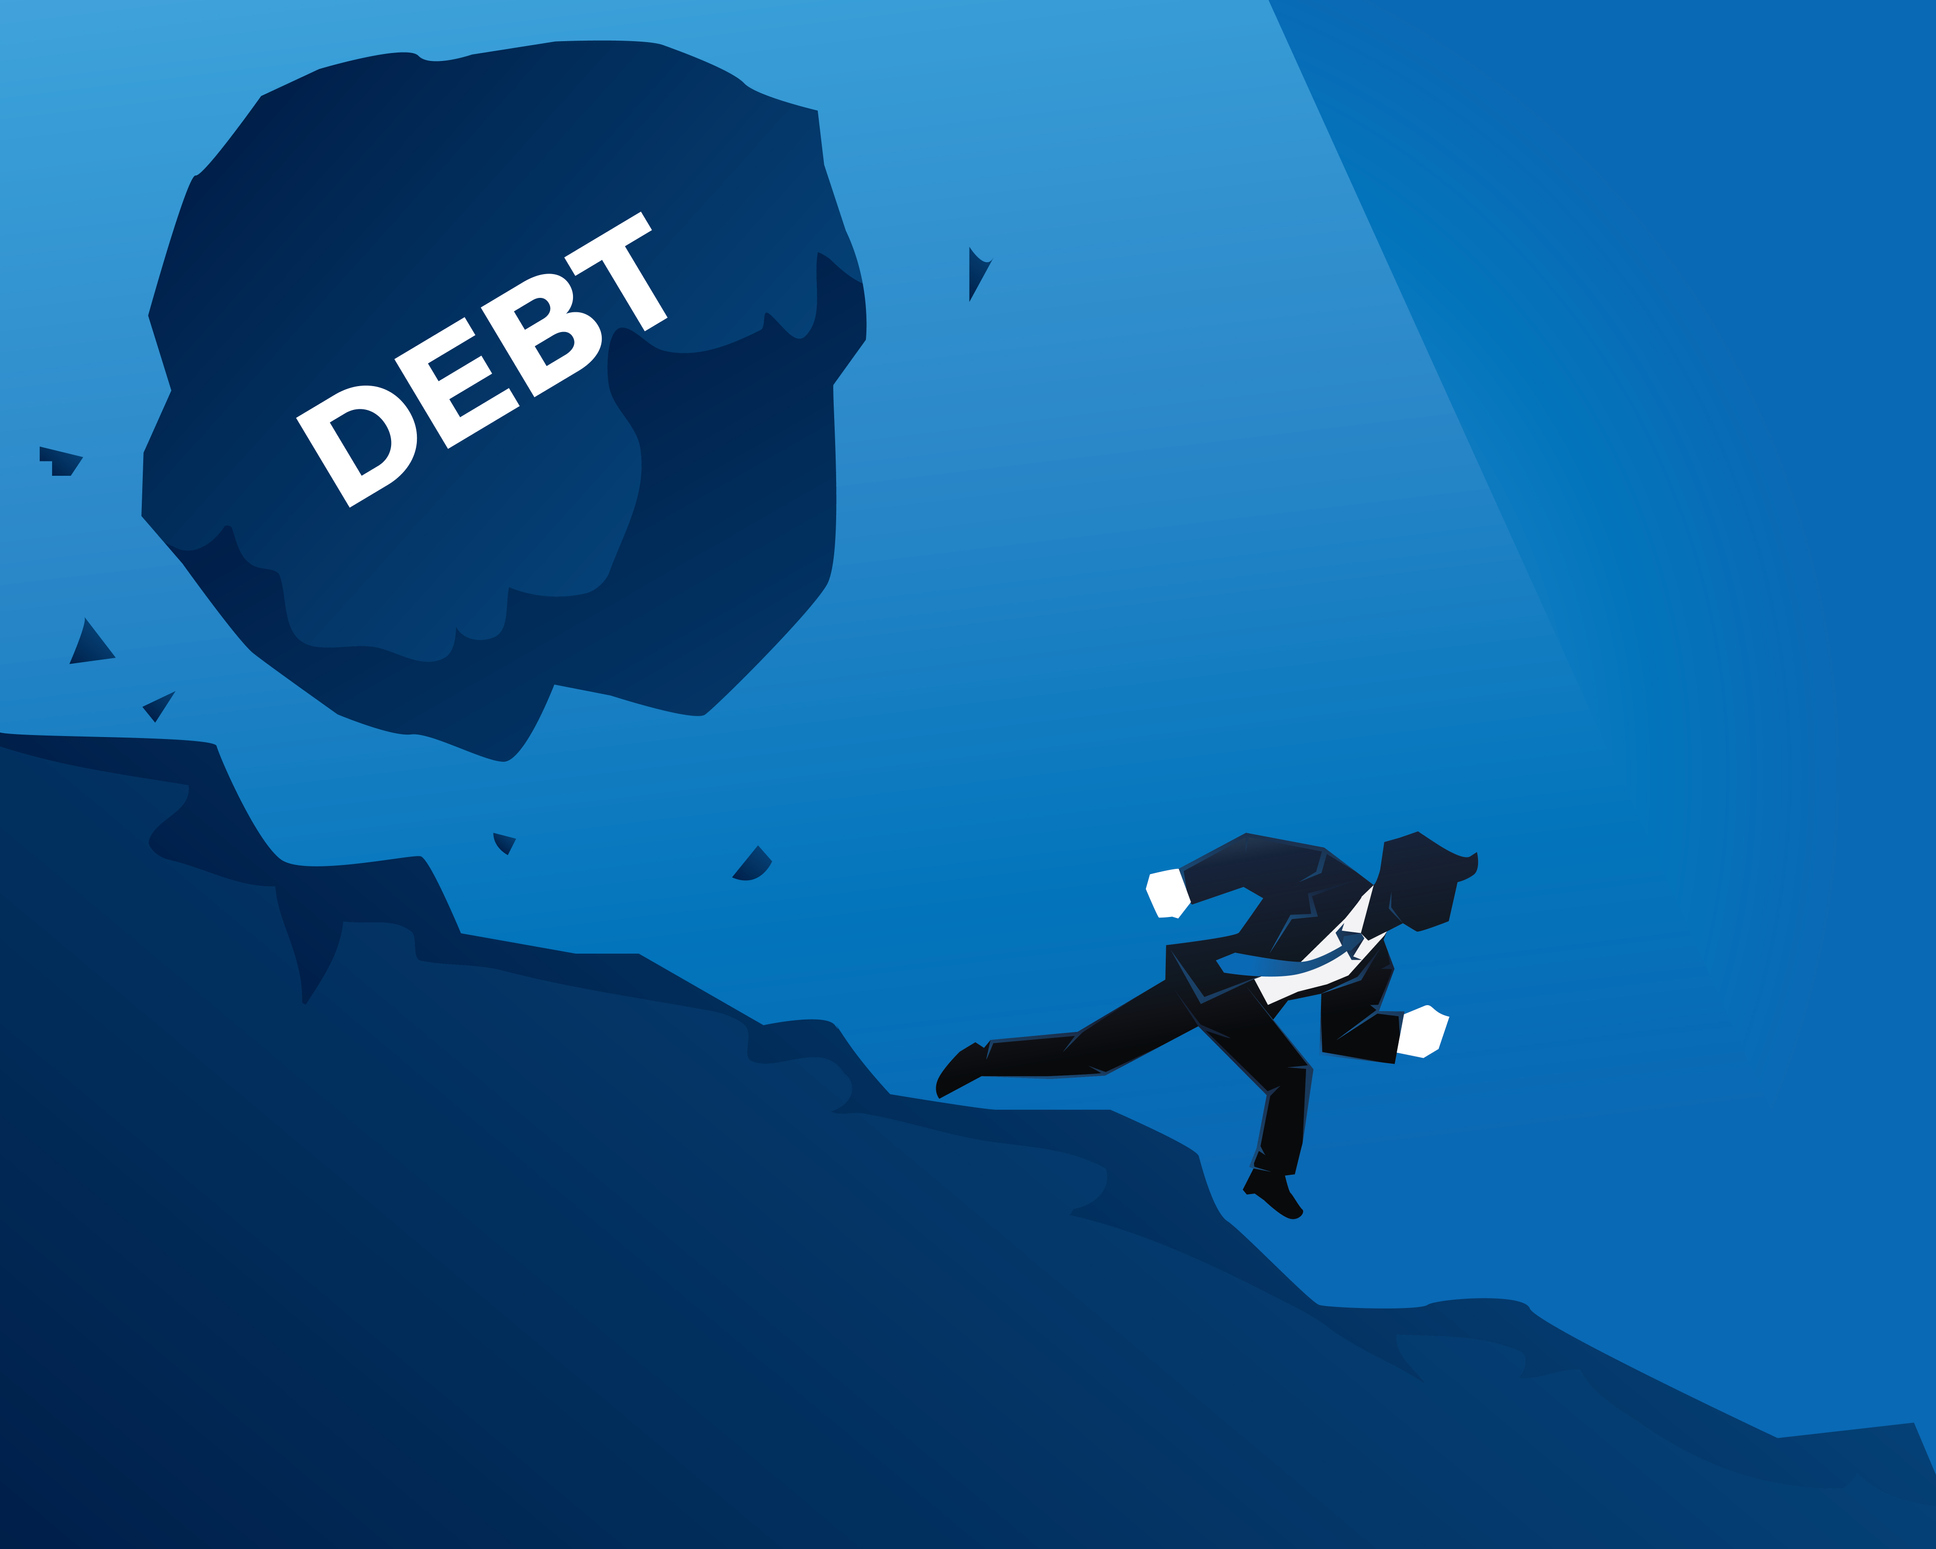 Debt Snowball Method